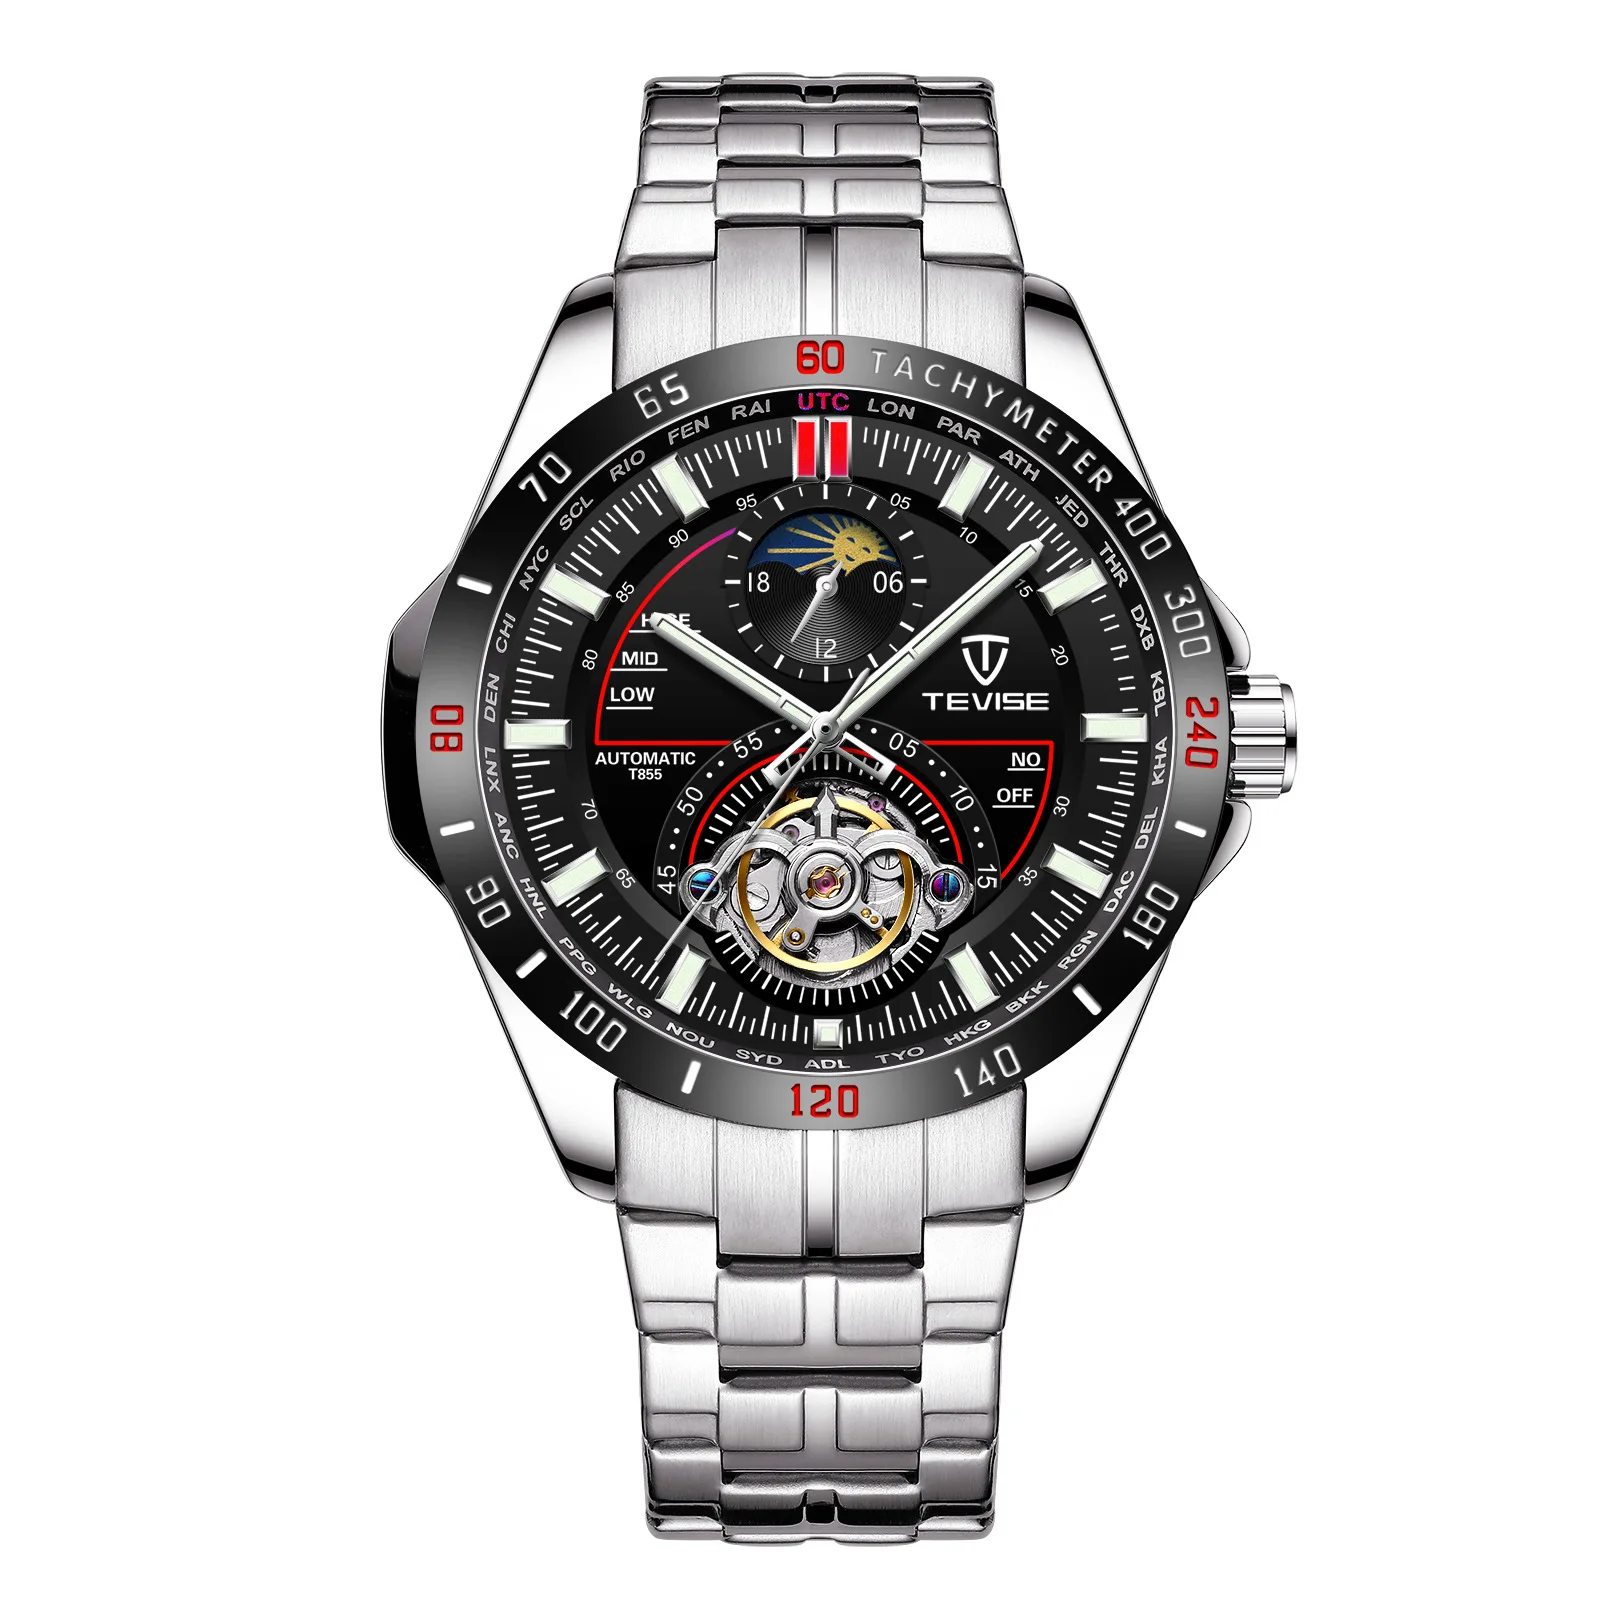 Automatic mechanical watch men's watch sports multifunctional large dial men's watch